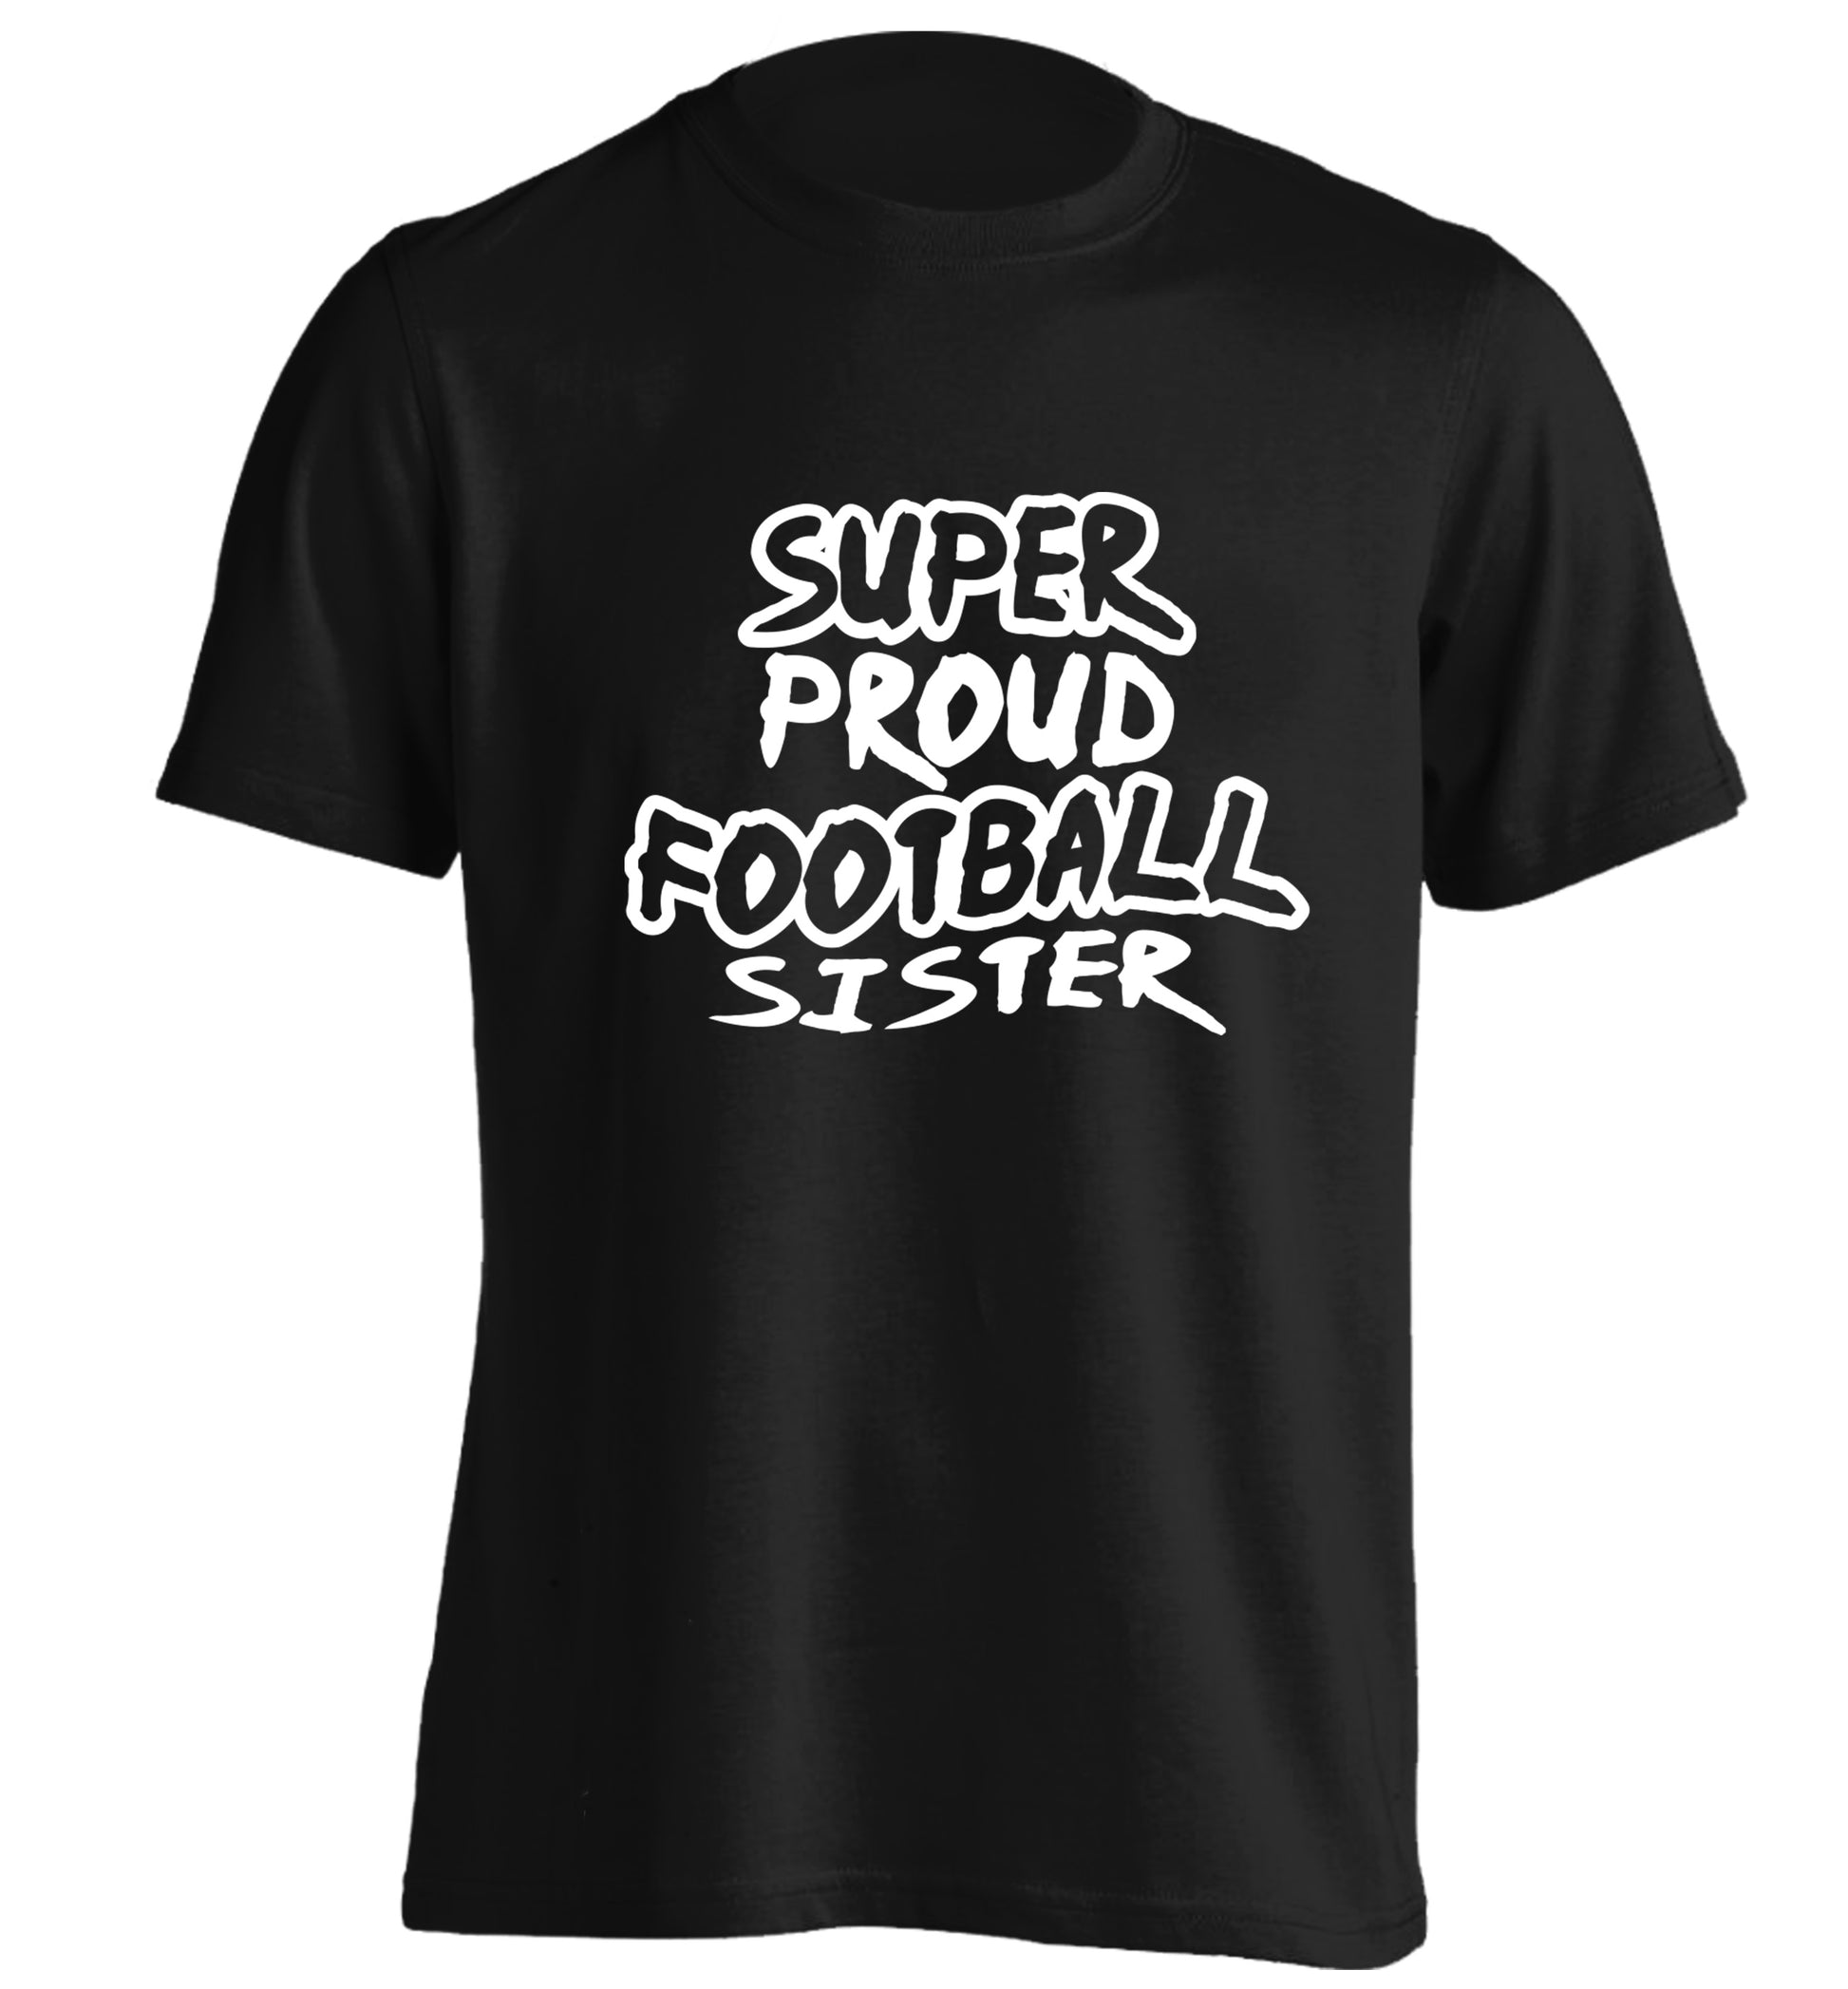 Super proud football sister adults unisexblack Tshirt 2XL